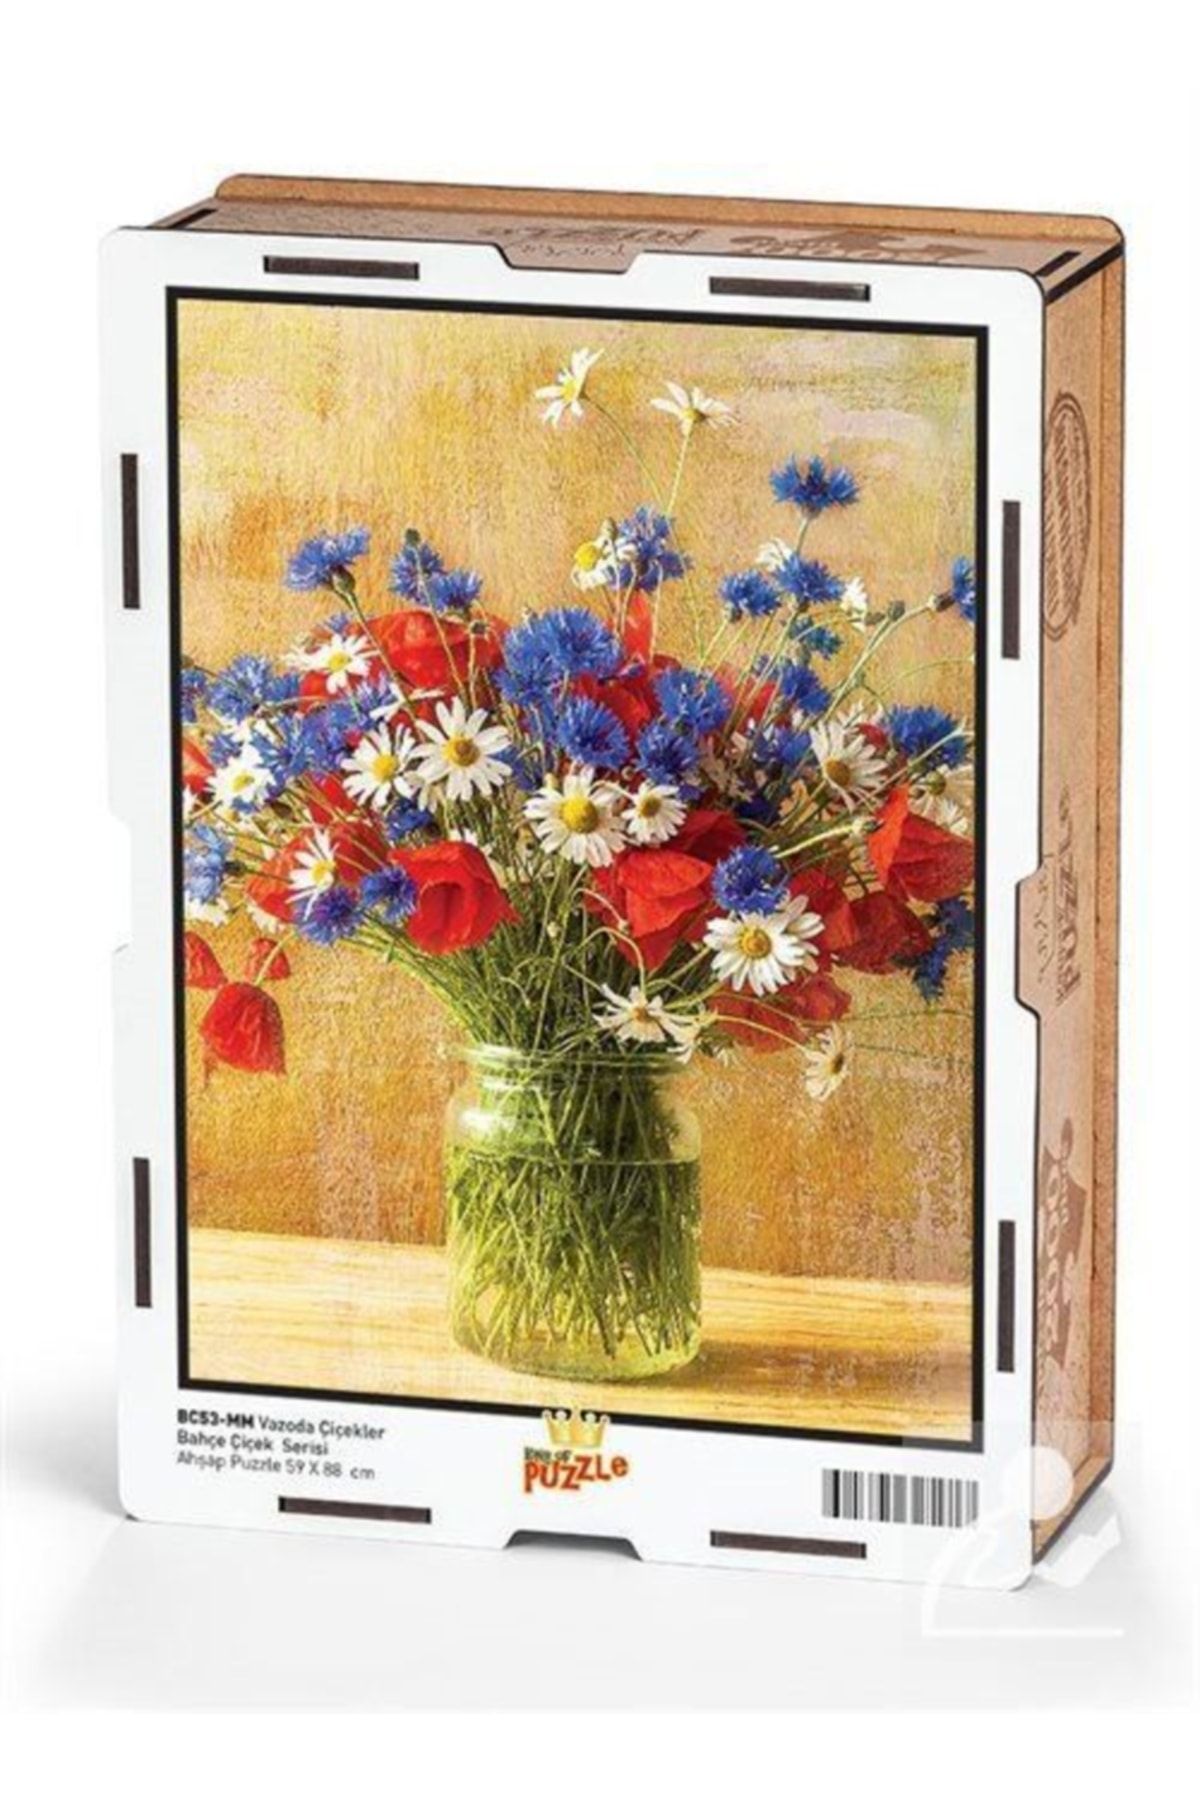 King Of Puzzle Vazoda Çiçekler Ahşap Puzzle 2000 Parça (bc53-mm)